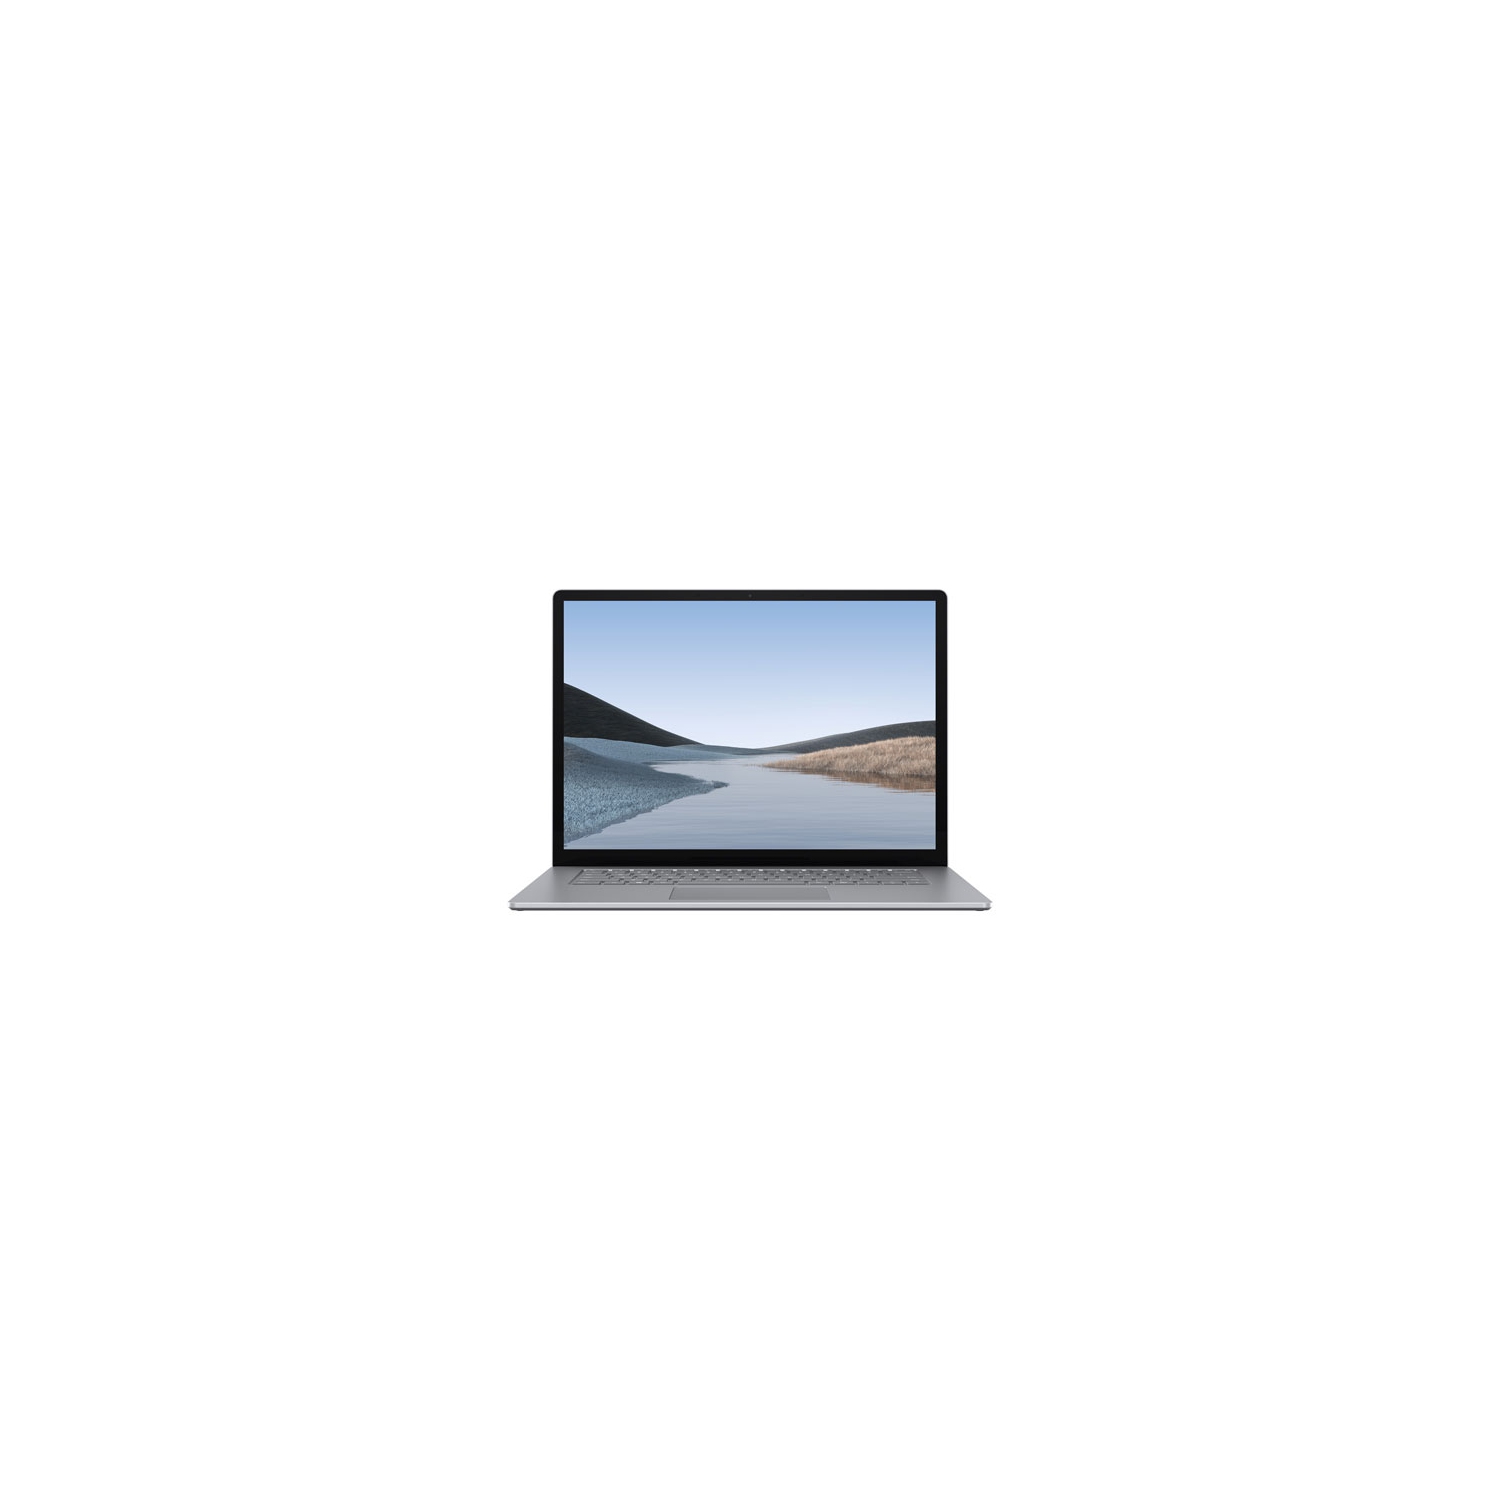 Microsoft Surface Laptop 3 15" - Platinum (AMD Ryzen 5/256GB SSD/16GB RAM) - French